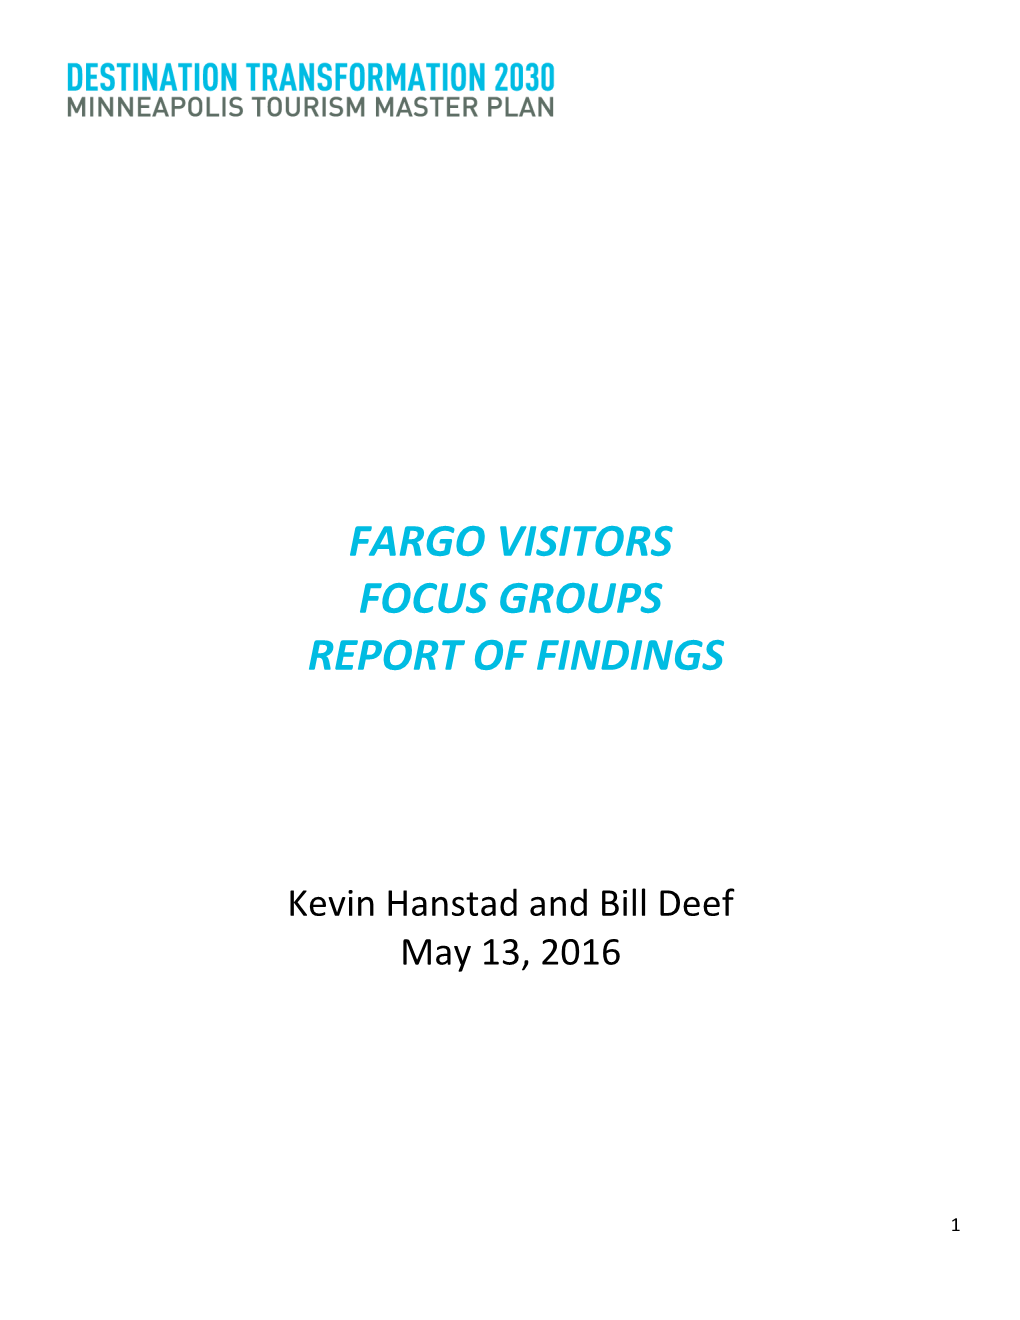 Fargo Visitors Focus Groups Report of Findings